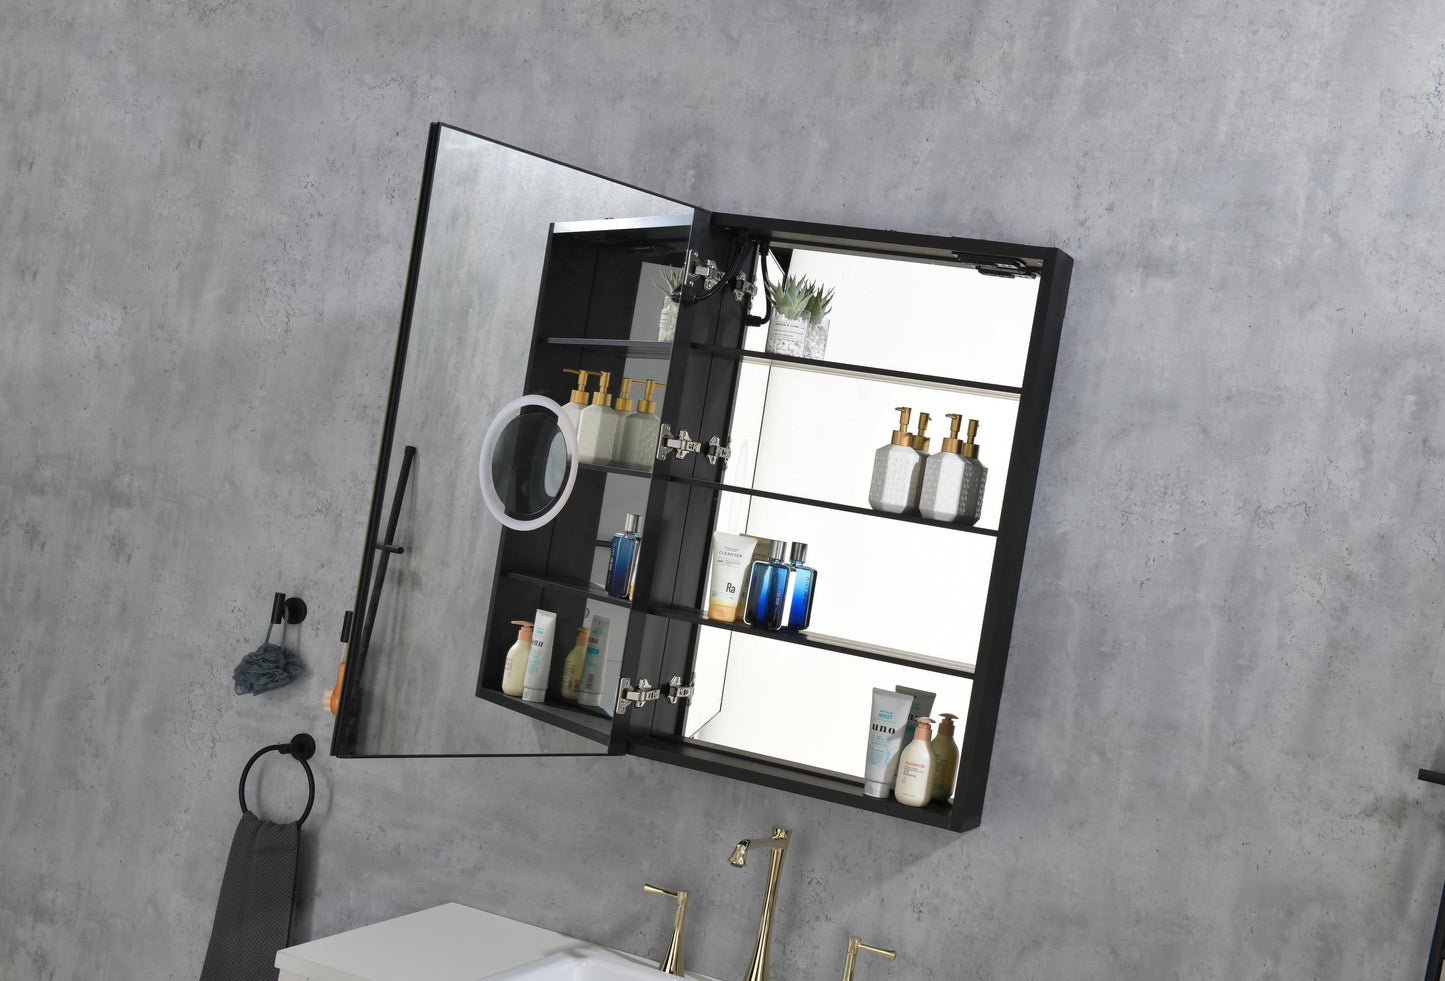 LED Lighted Bathroom Medicine Cabinet with Mirror, Surface Lighted Medicine Cabinet,Dimmable,Adjustable Shelves,Intelligent Switch Medicine Cabinet, Aluminum Frame,Right opening door